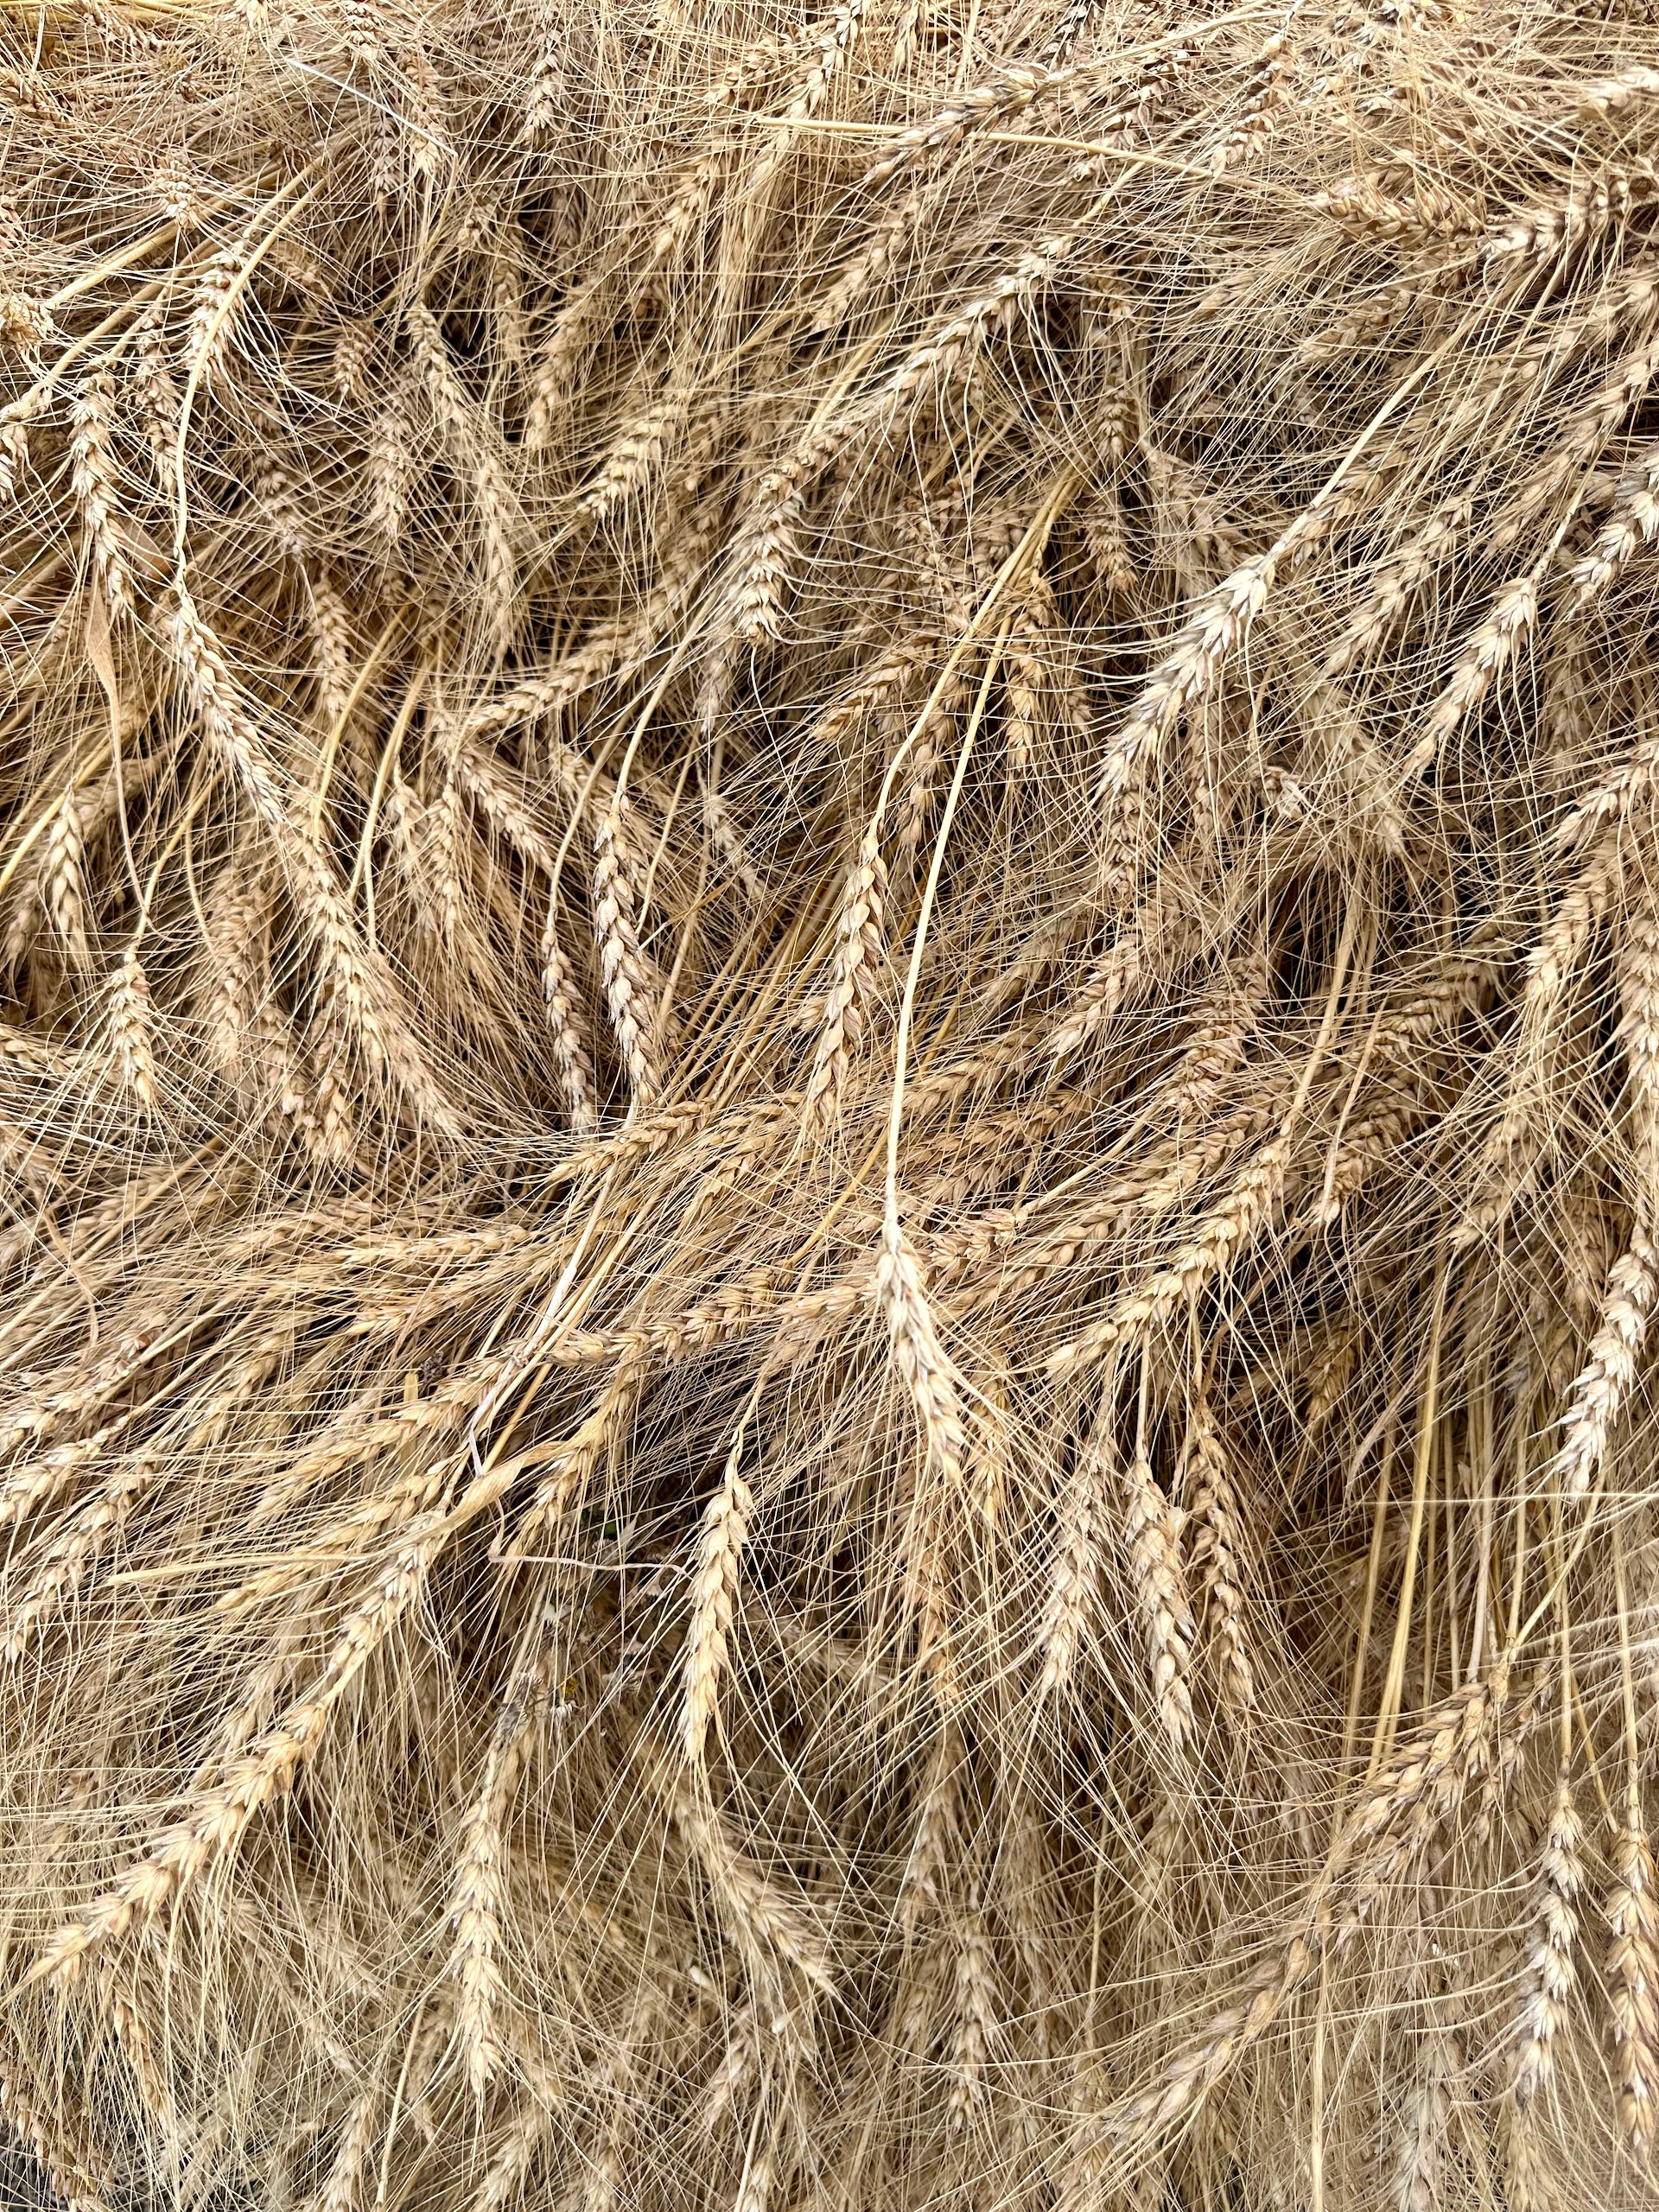  Sheaths of wheat 